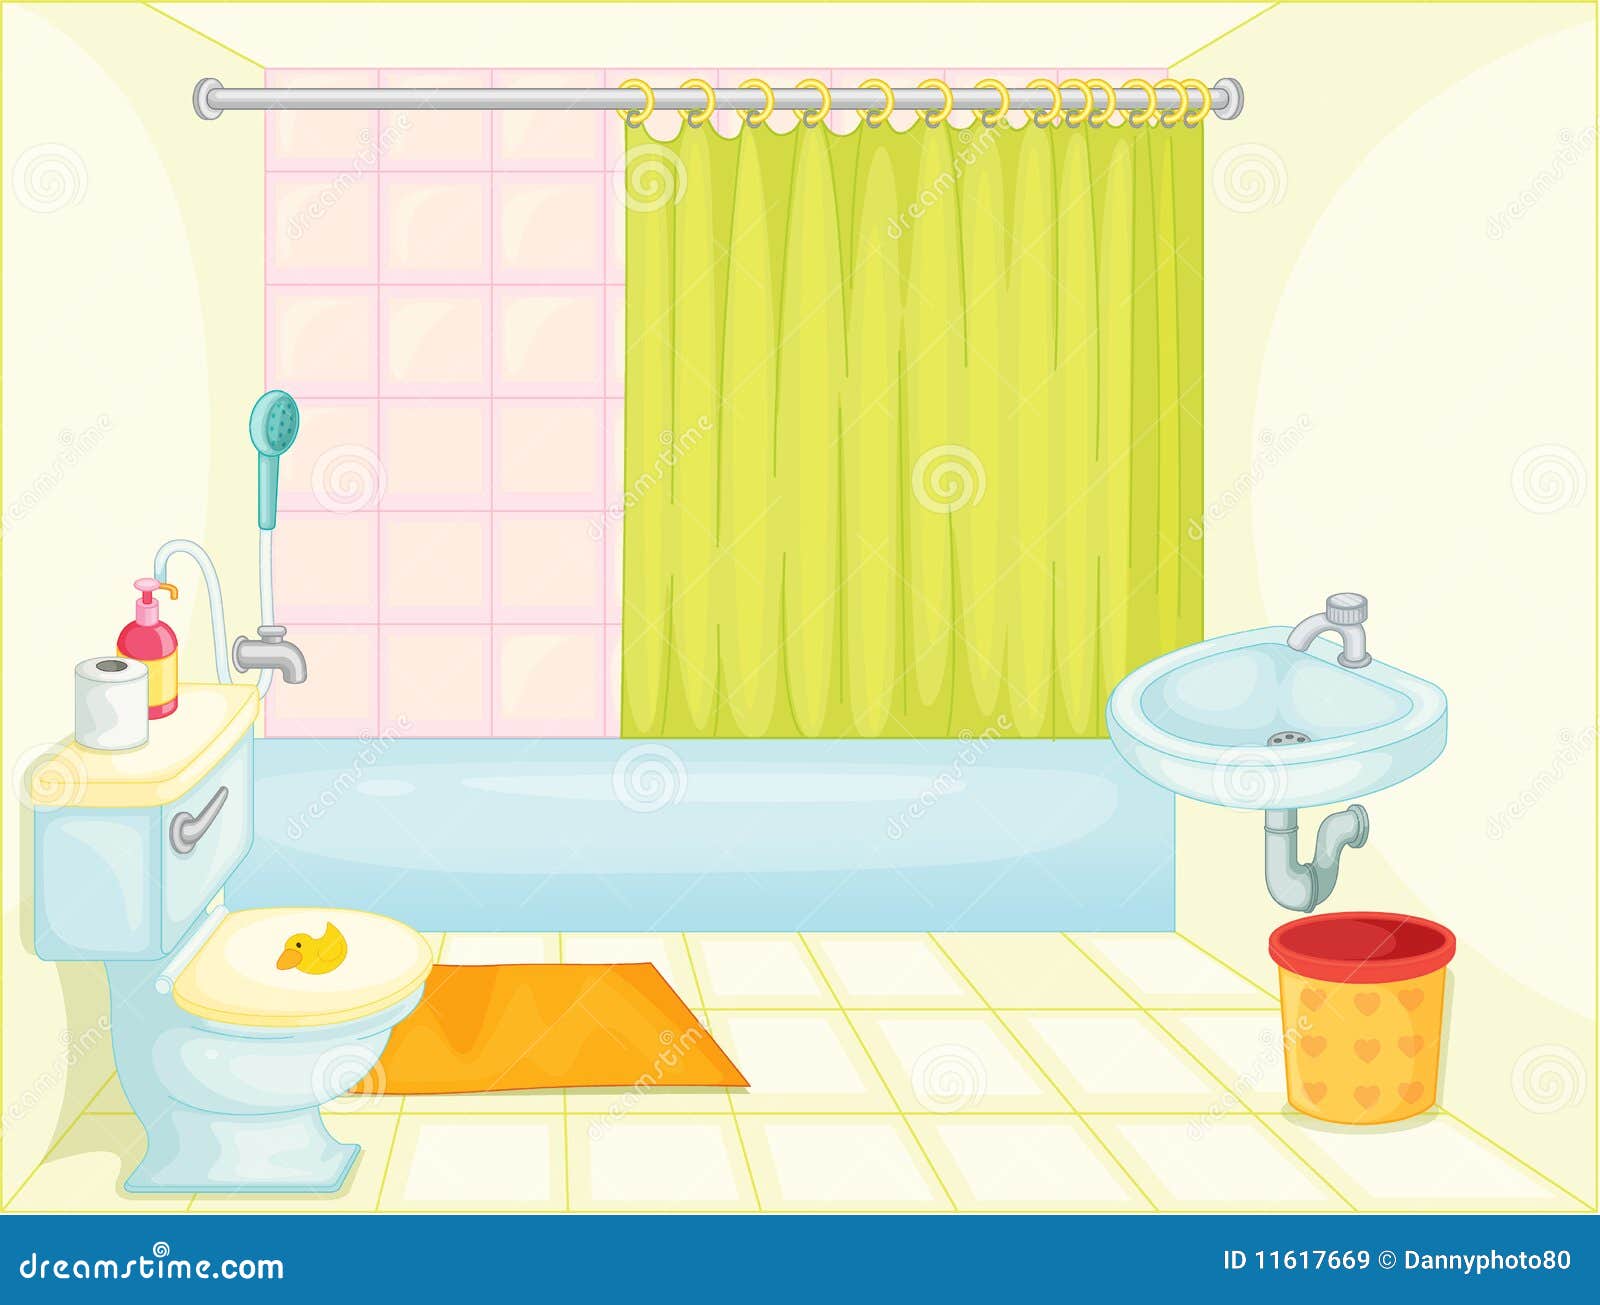 Bathroom stock vector. Illustration of graphic, bathroom - 11617669